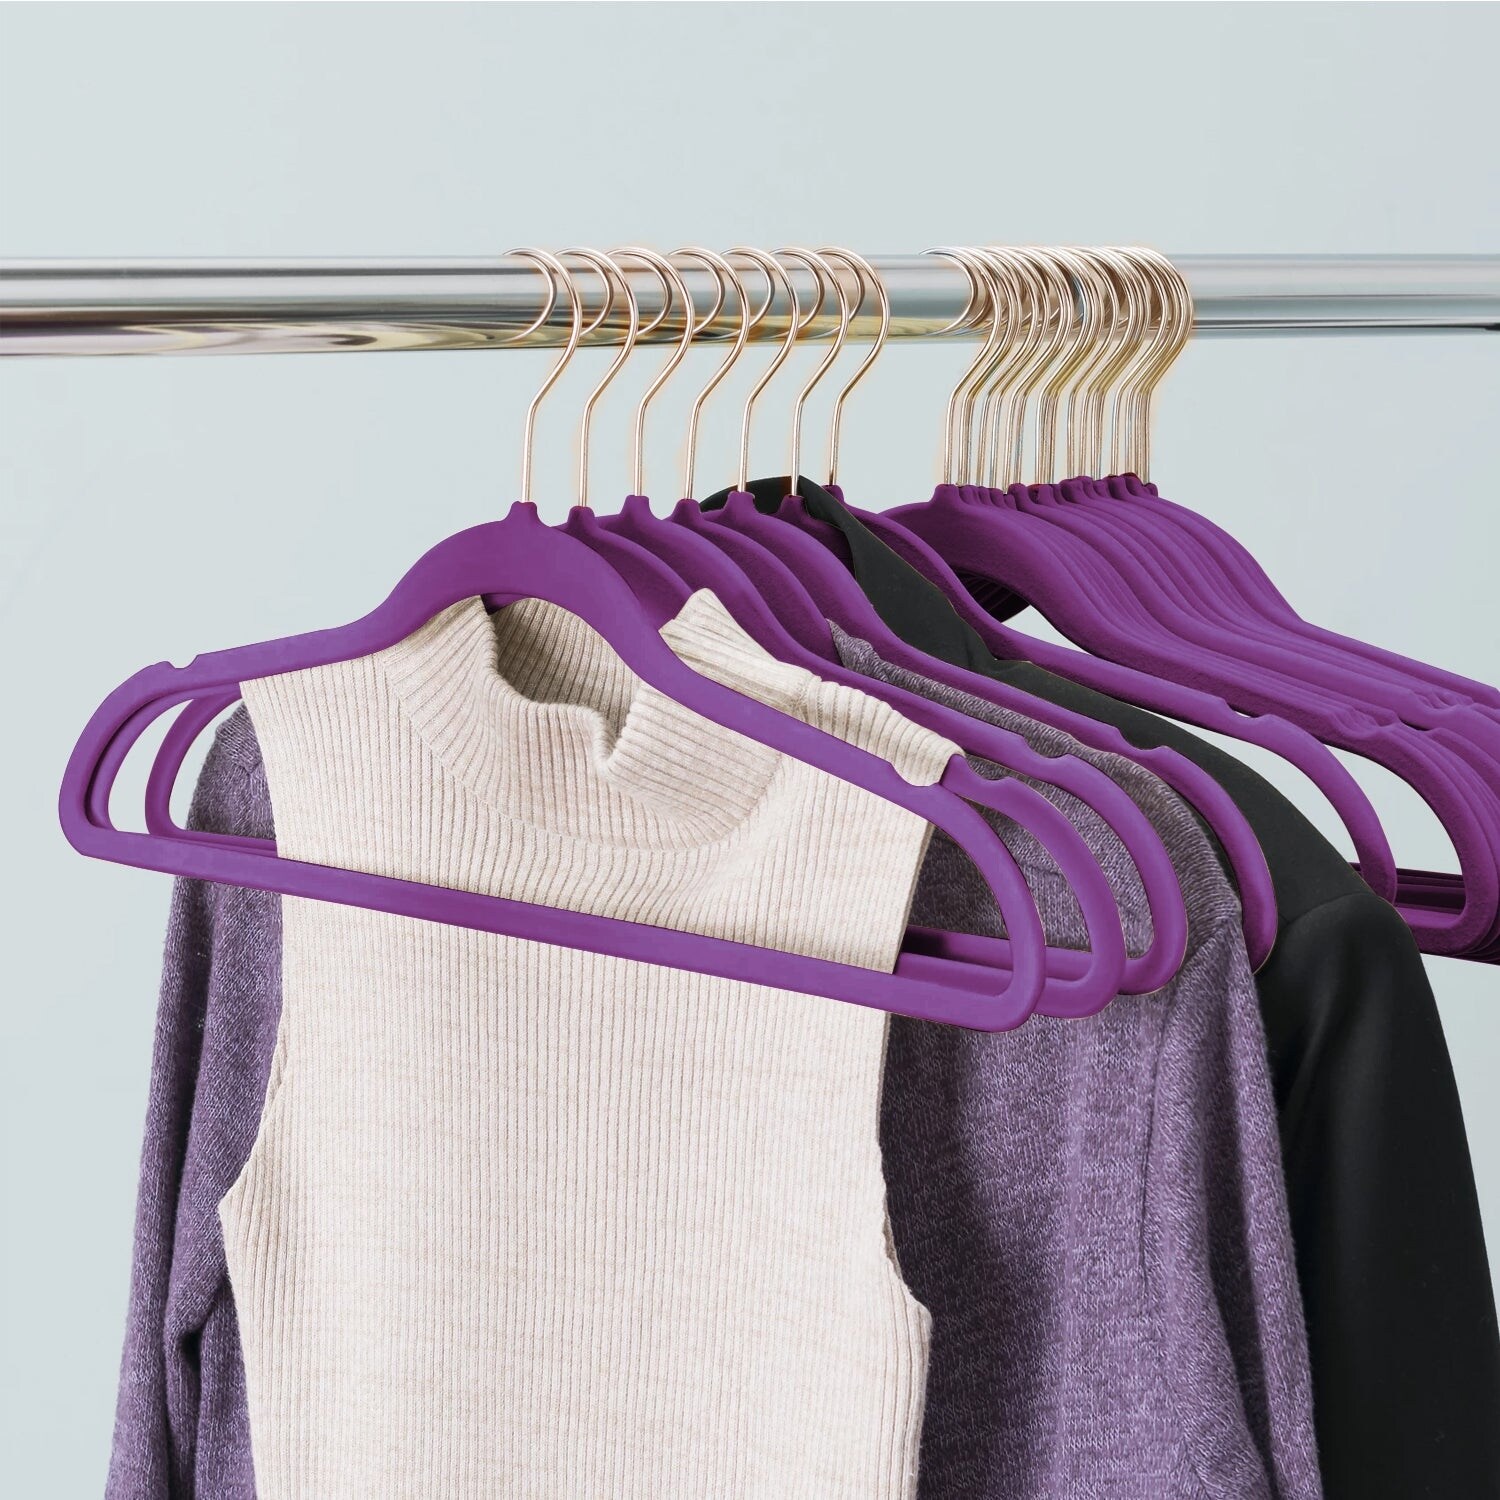   Basics Slim Velvet, Non-Slip Suit Clothes Hangers, Pack  of 100, Black/Silver : Home & Kitchen